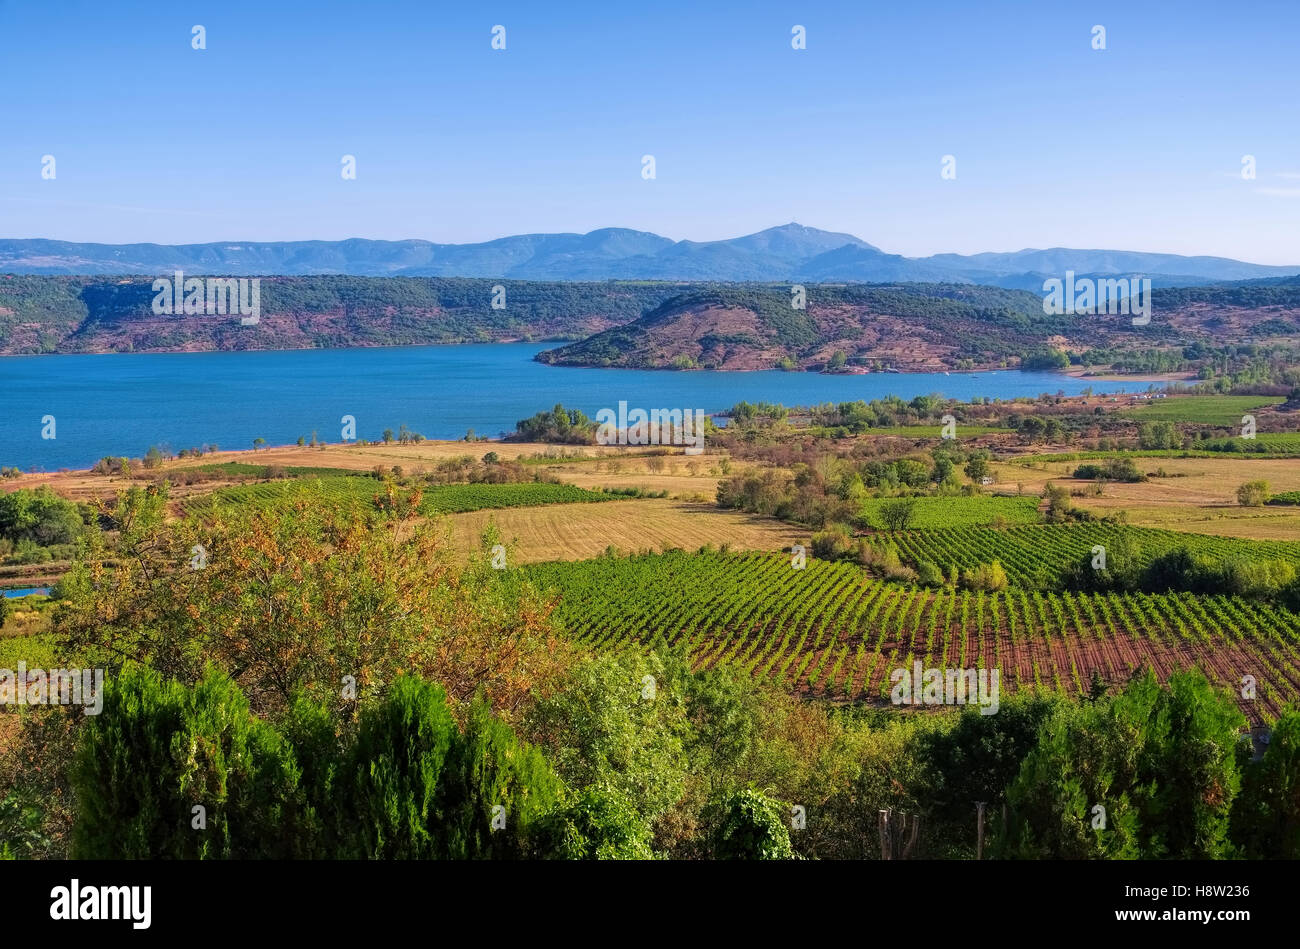 Lac du Salagou in Frankreich - Lac du Salagou in Frankreich, Languedoc-Roussillon Stockfoto